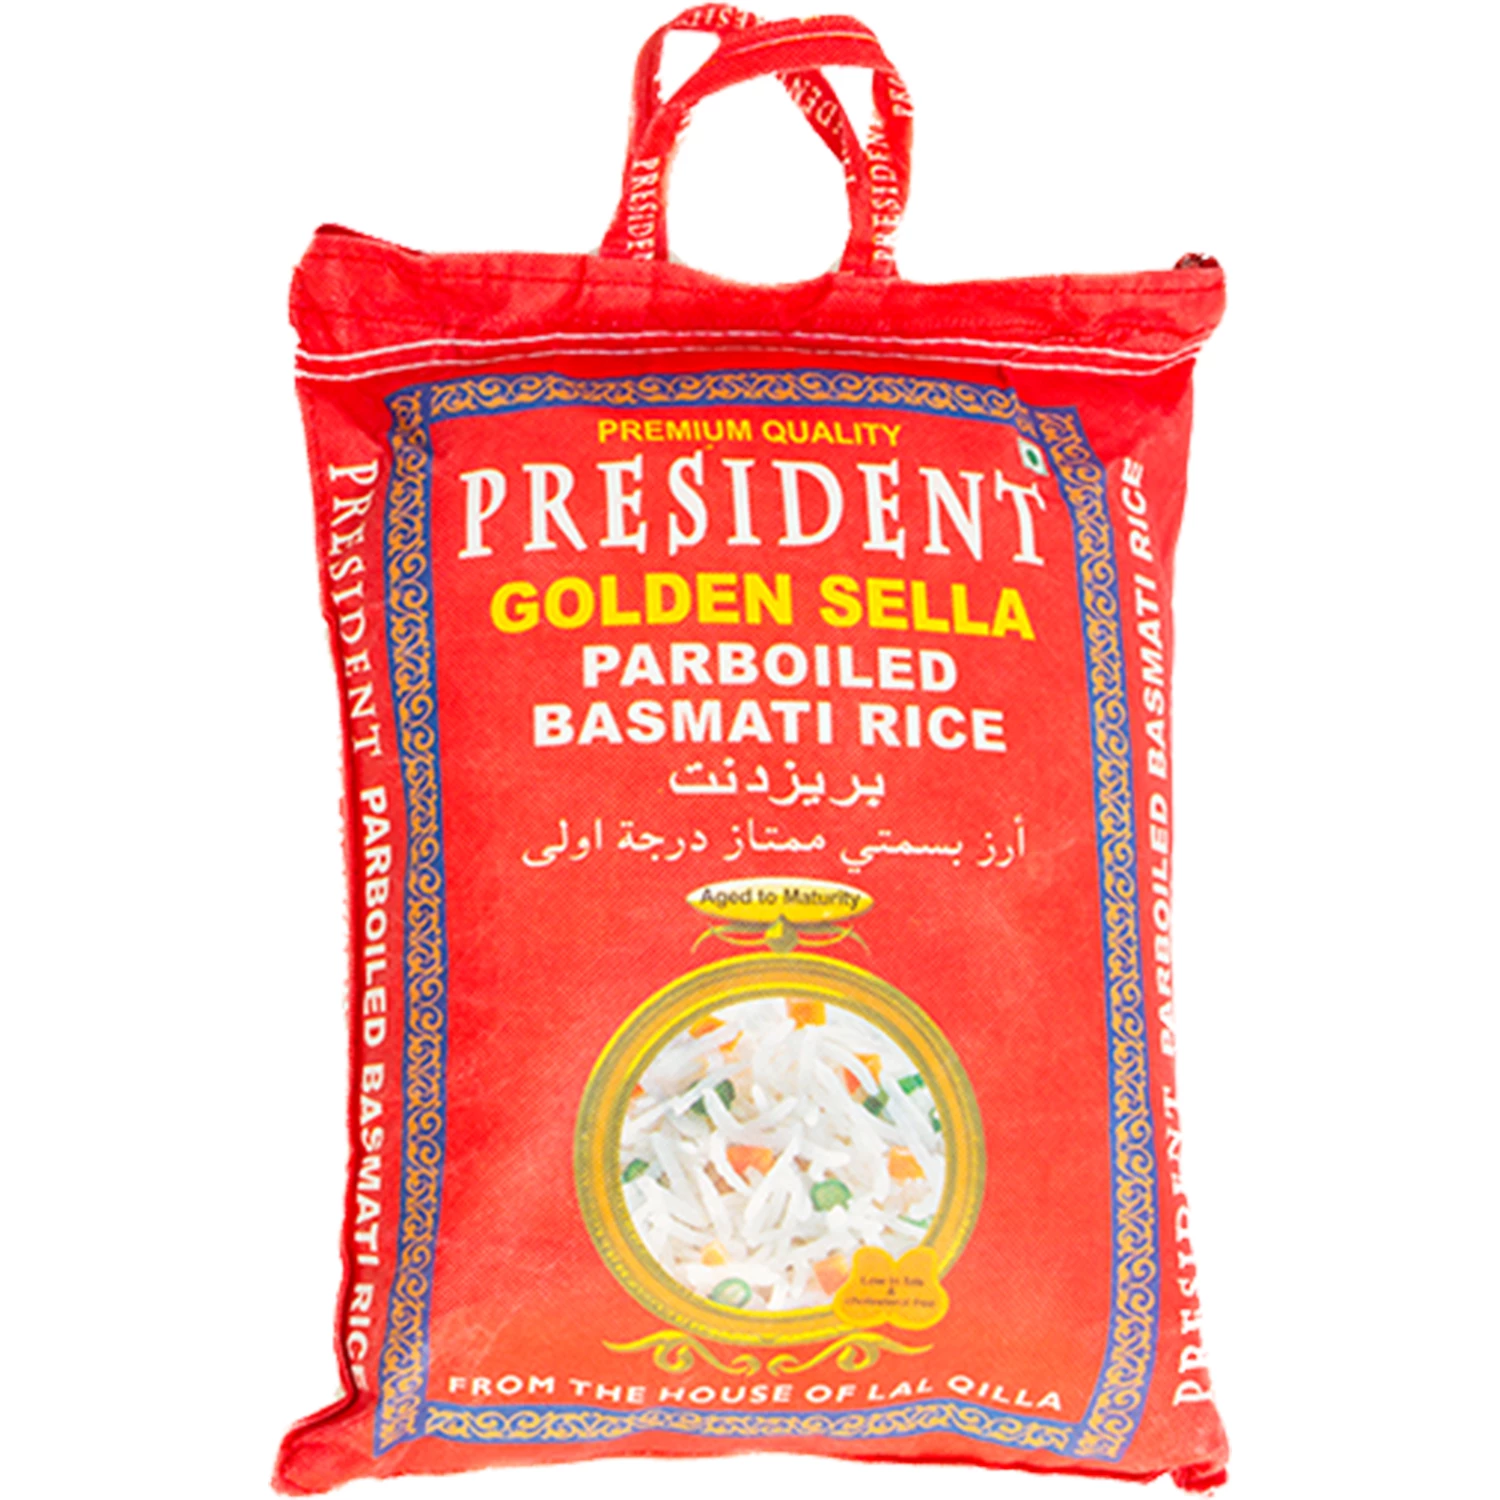 Golden Stella Basmati Rice 4 X 5 Kg - PRESIDENT